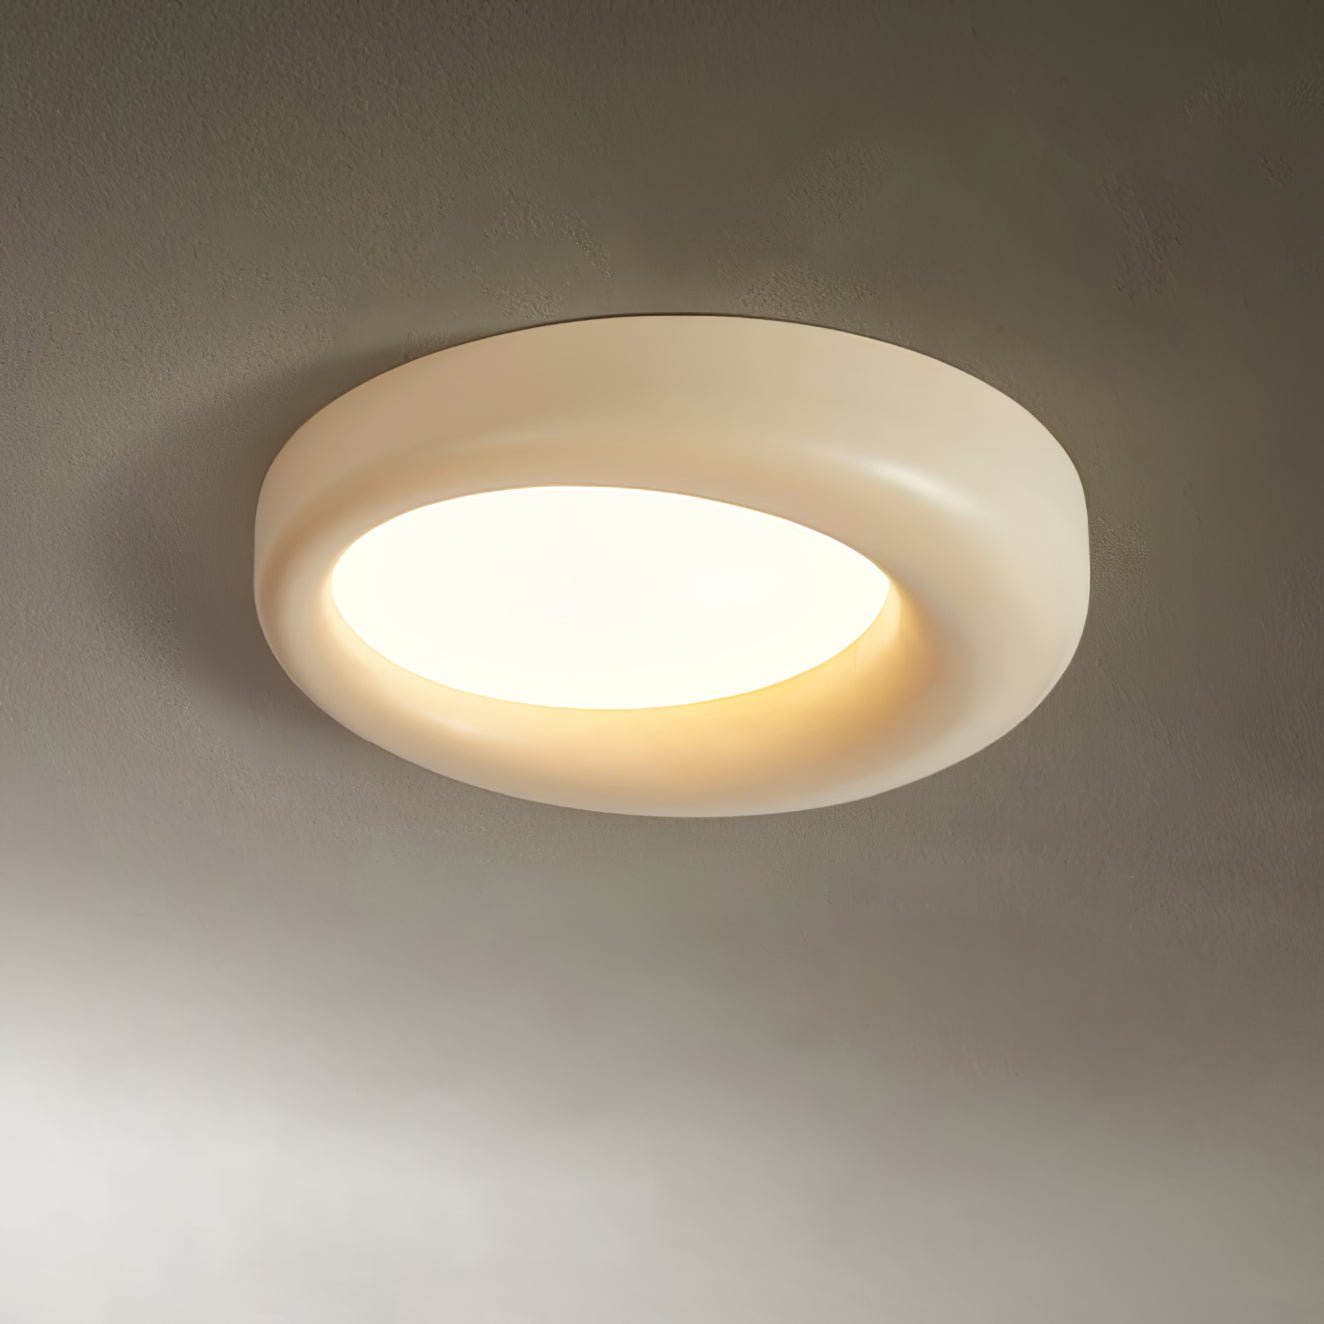 Beige Cool White Ceiling Lamp - 22.8" Diameter x 3.5" Height (58cm x 13cm)